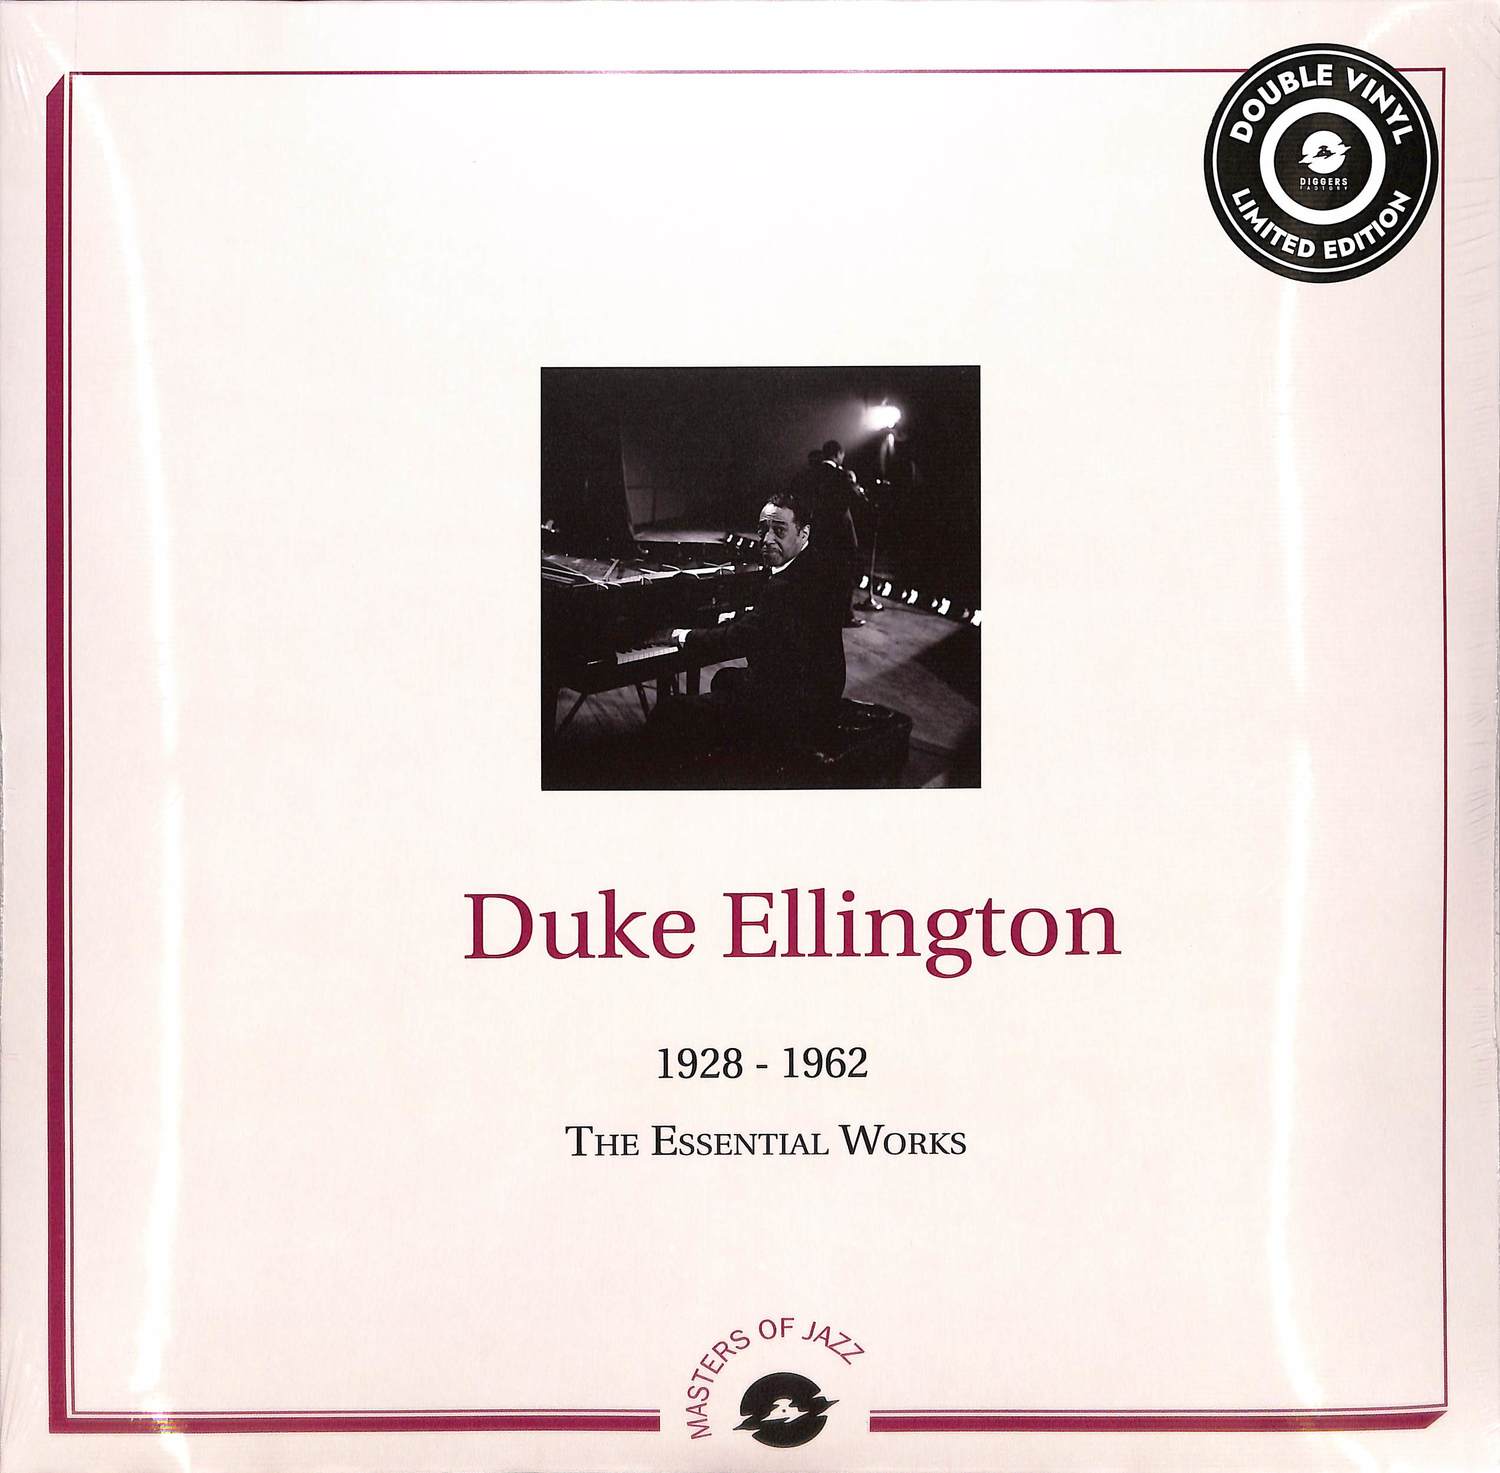 Duke Ellington - THE ESSENTIAL WORKS 1928-1962 